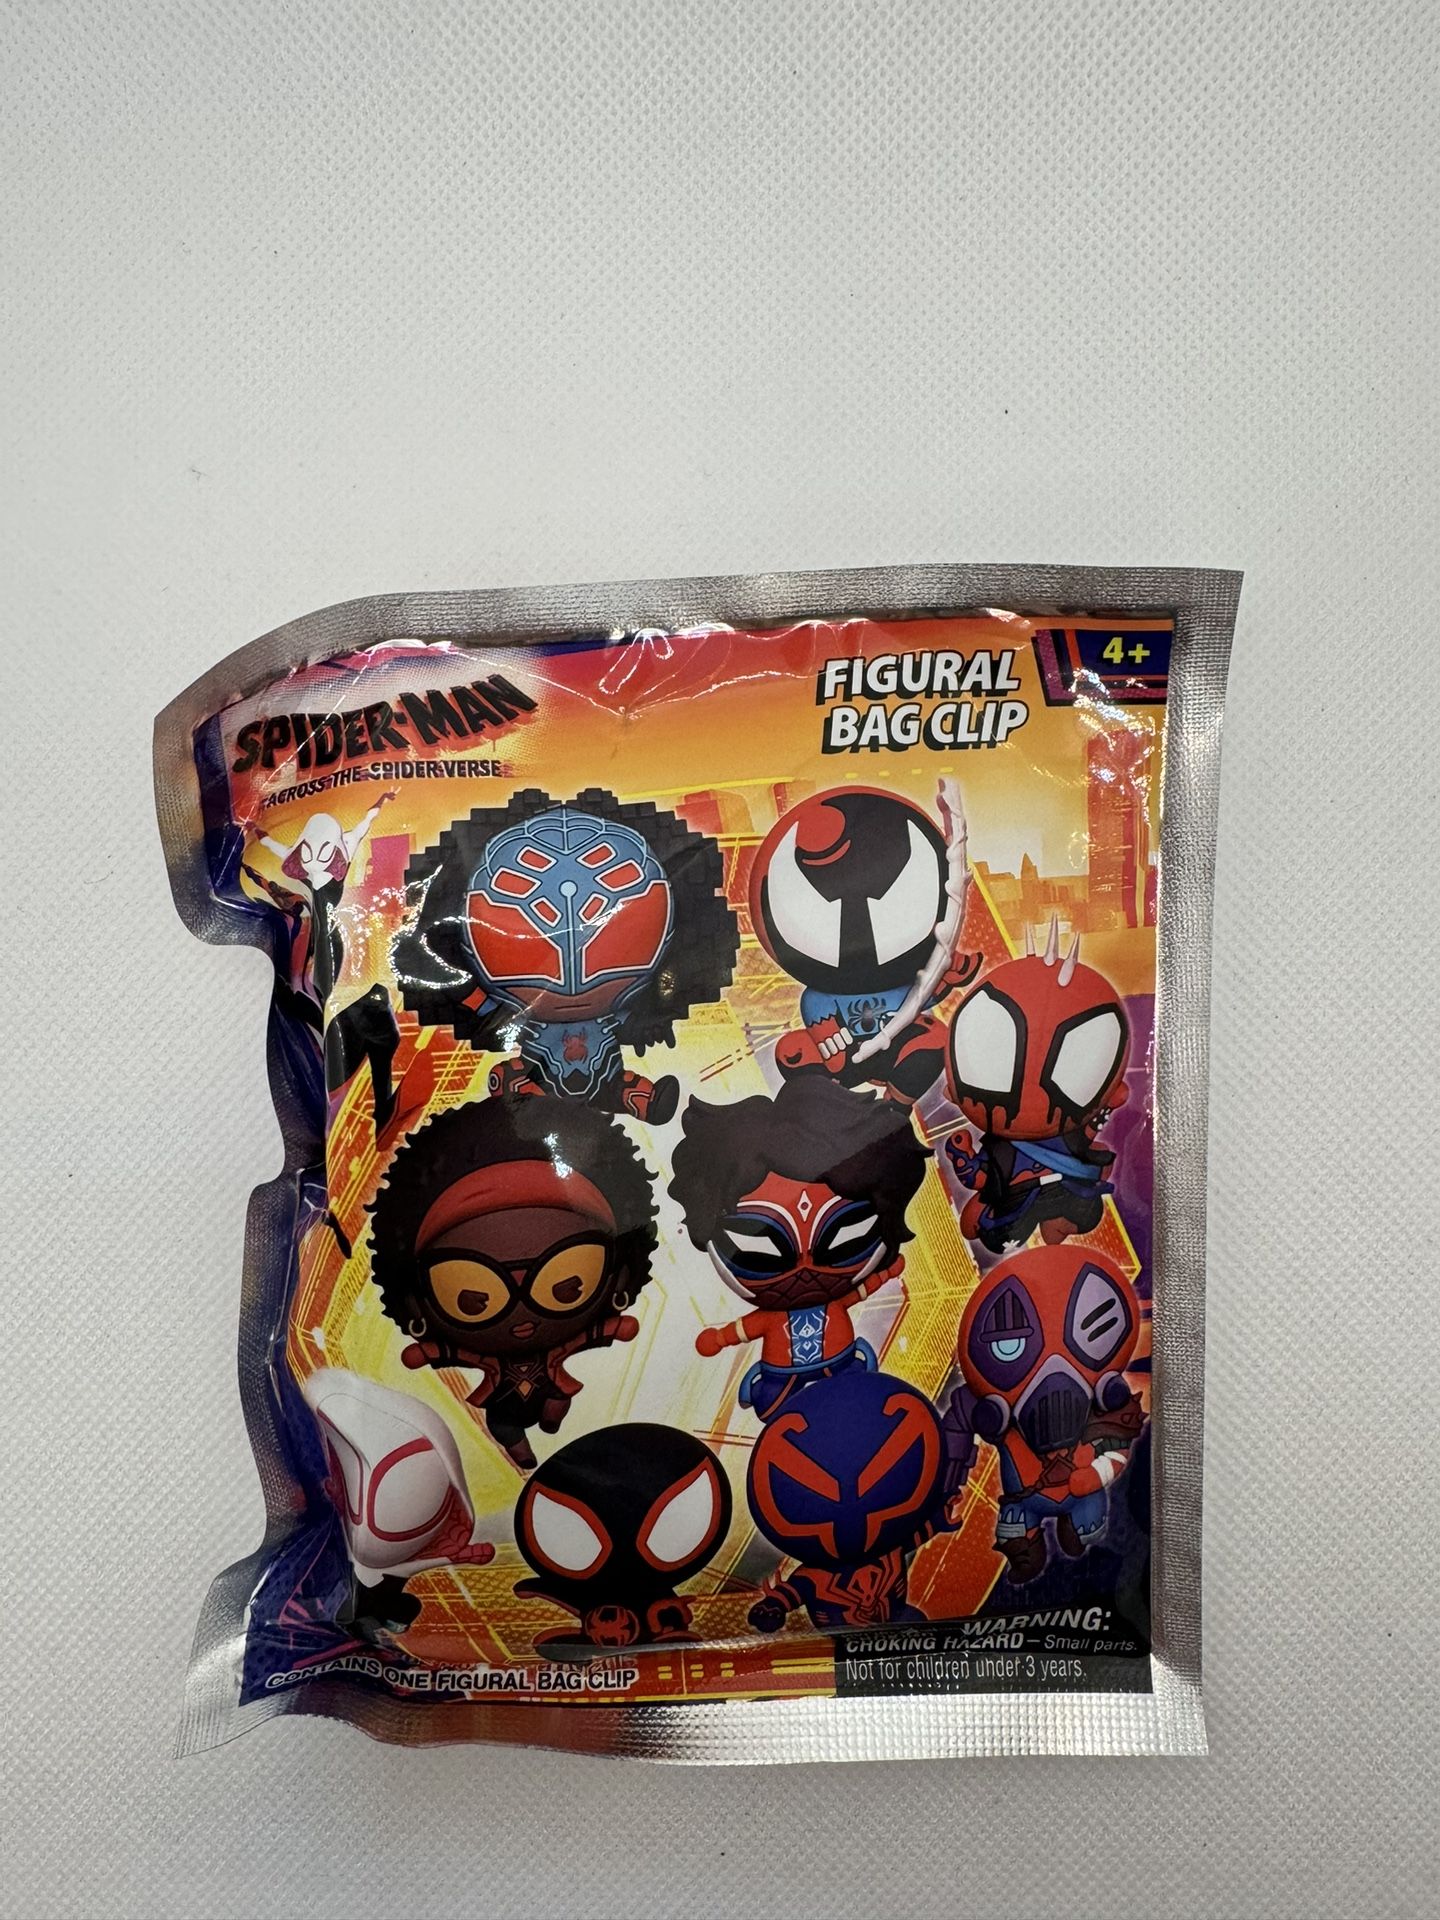 Spider-Verse 3D Foam Bag Clip Series